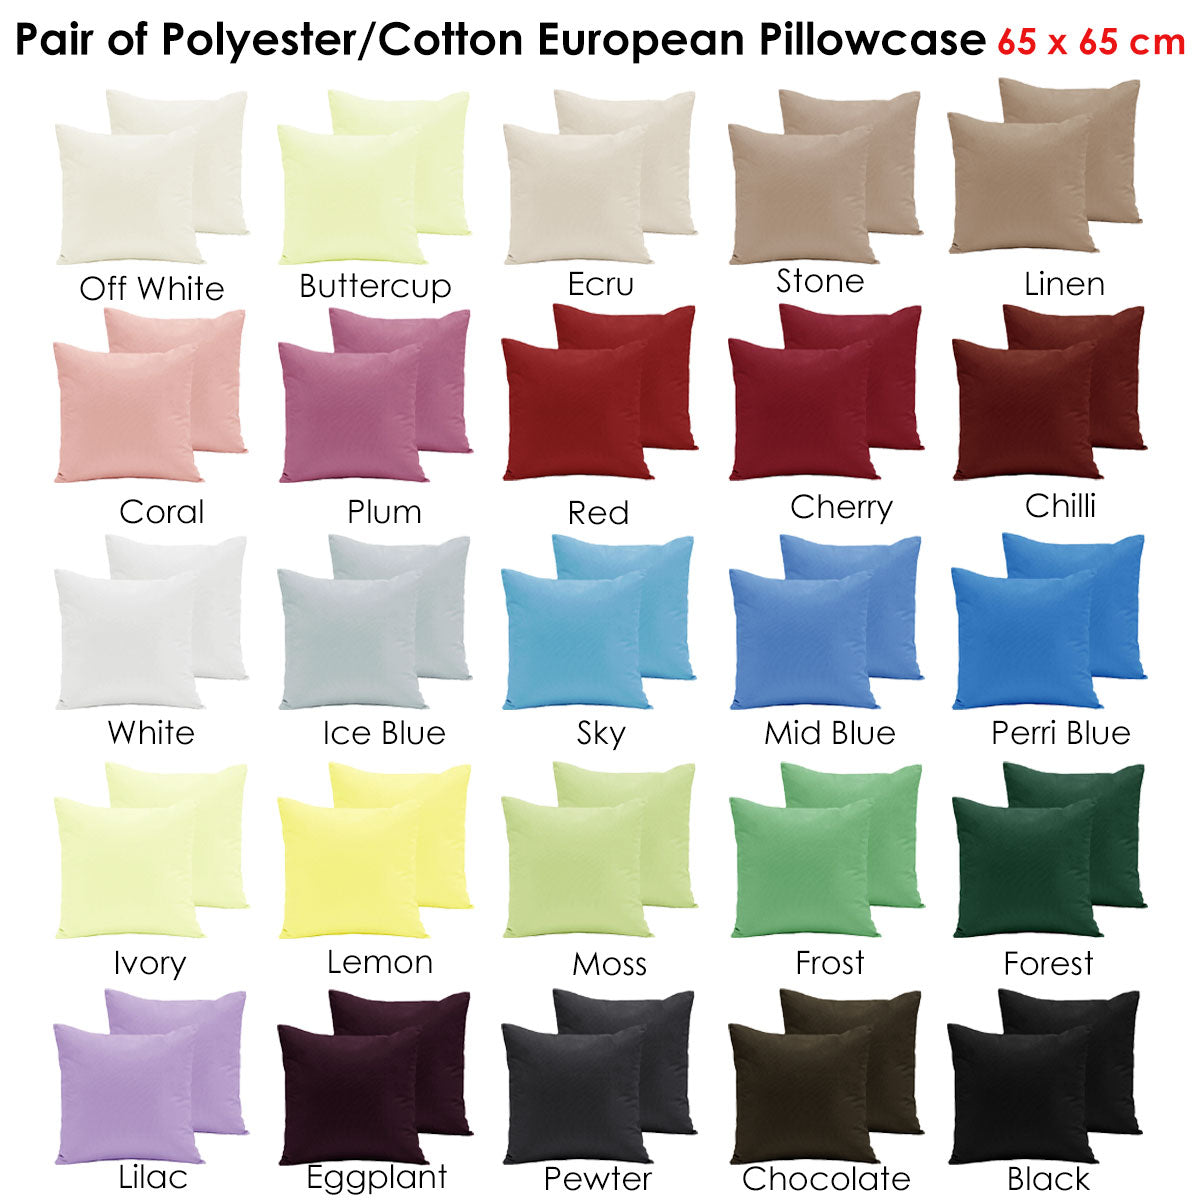 Pair of Polyester Cotton European Pillowcases Chocolate